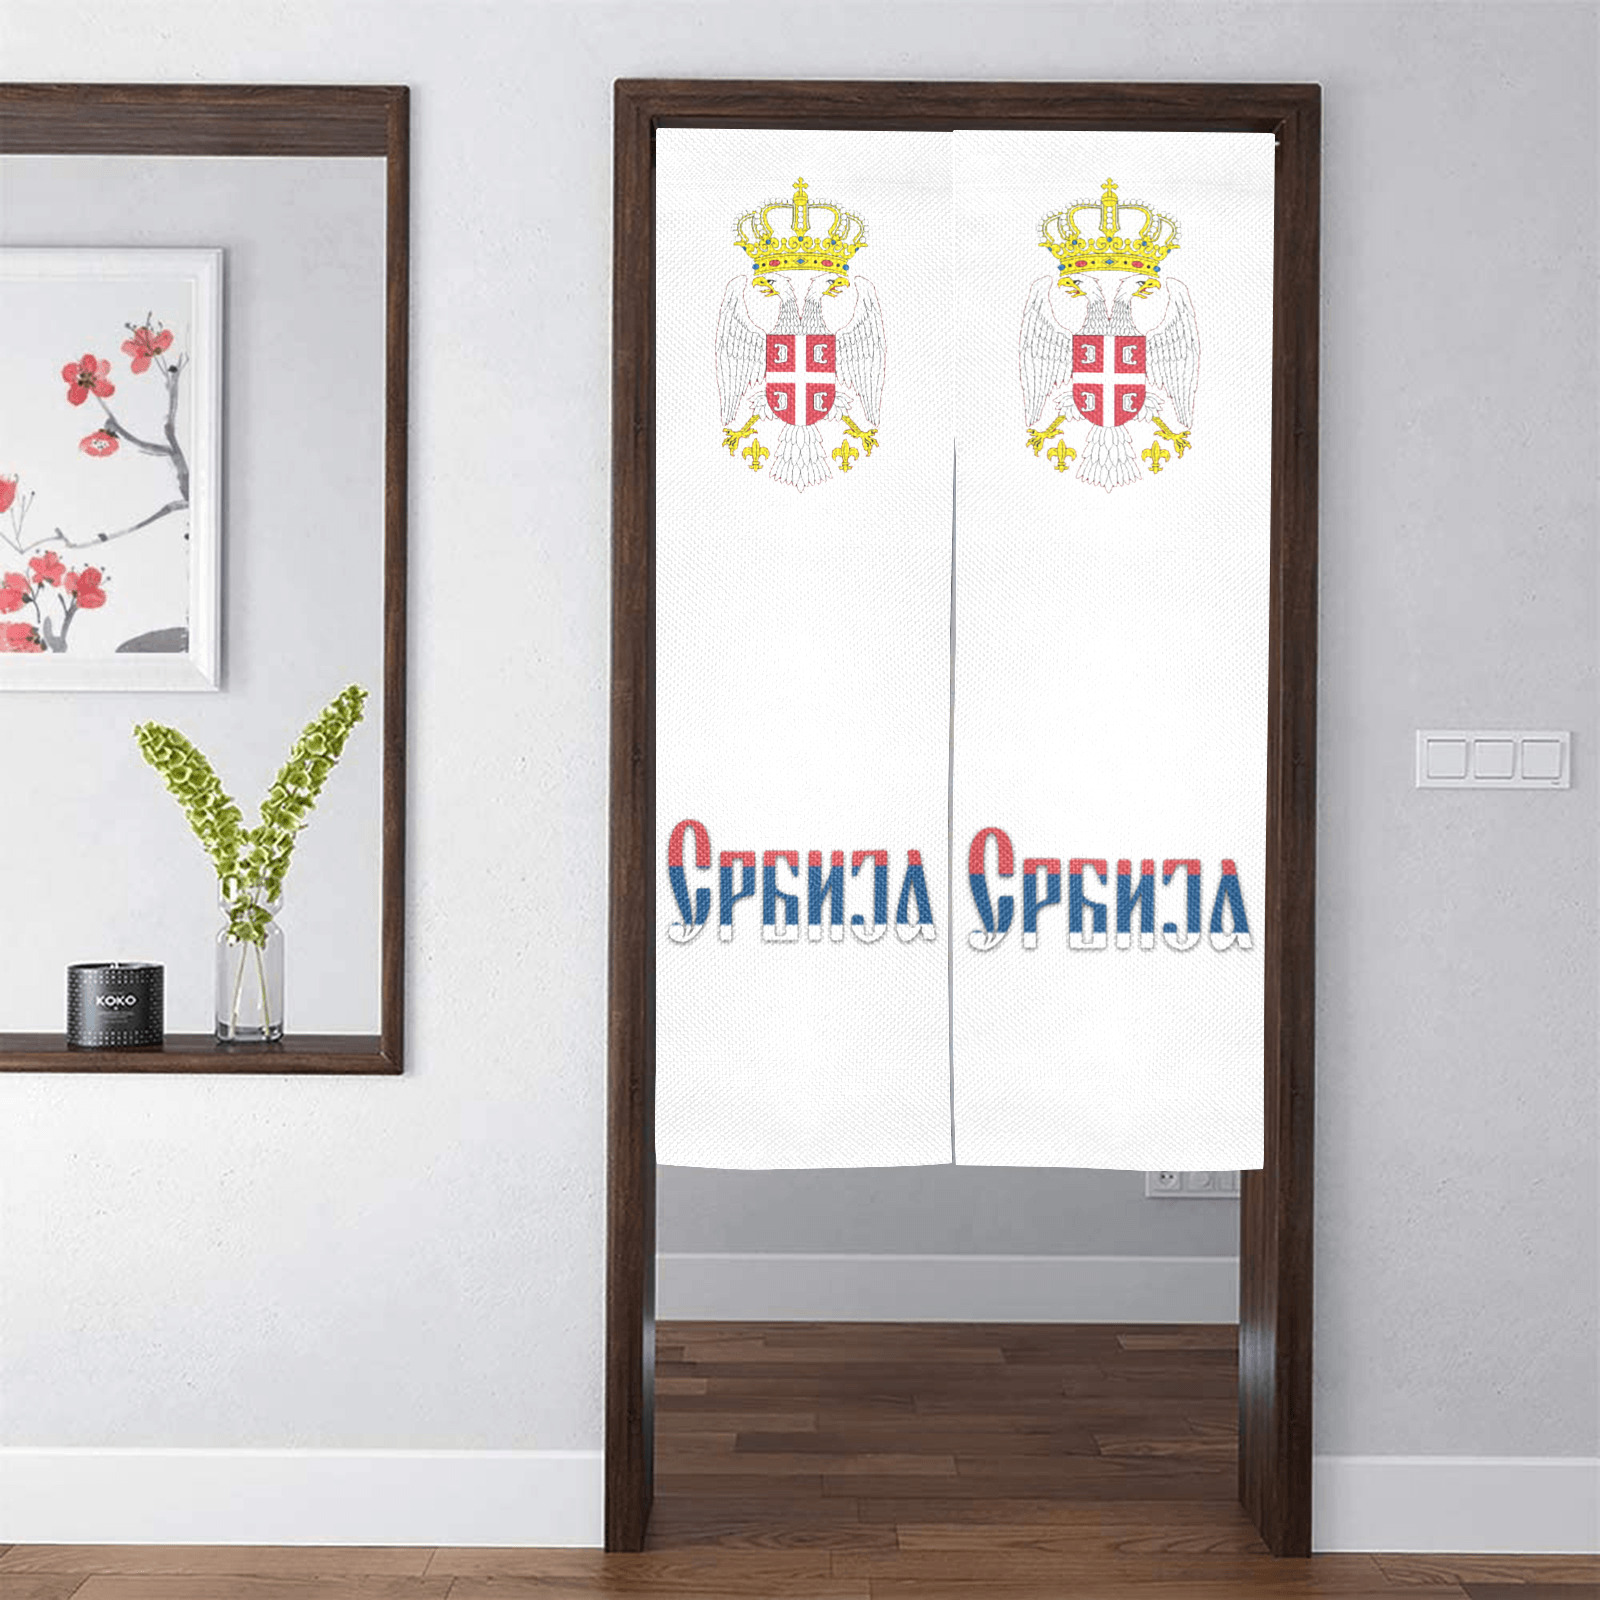 Serbia Door Curtain Tapestry